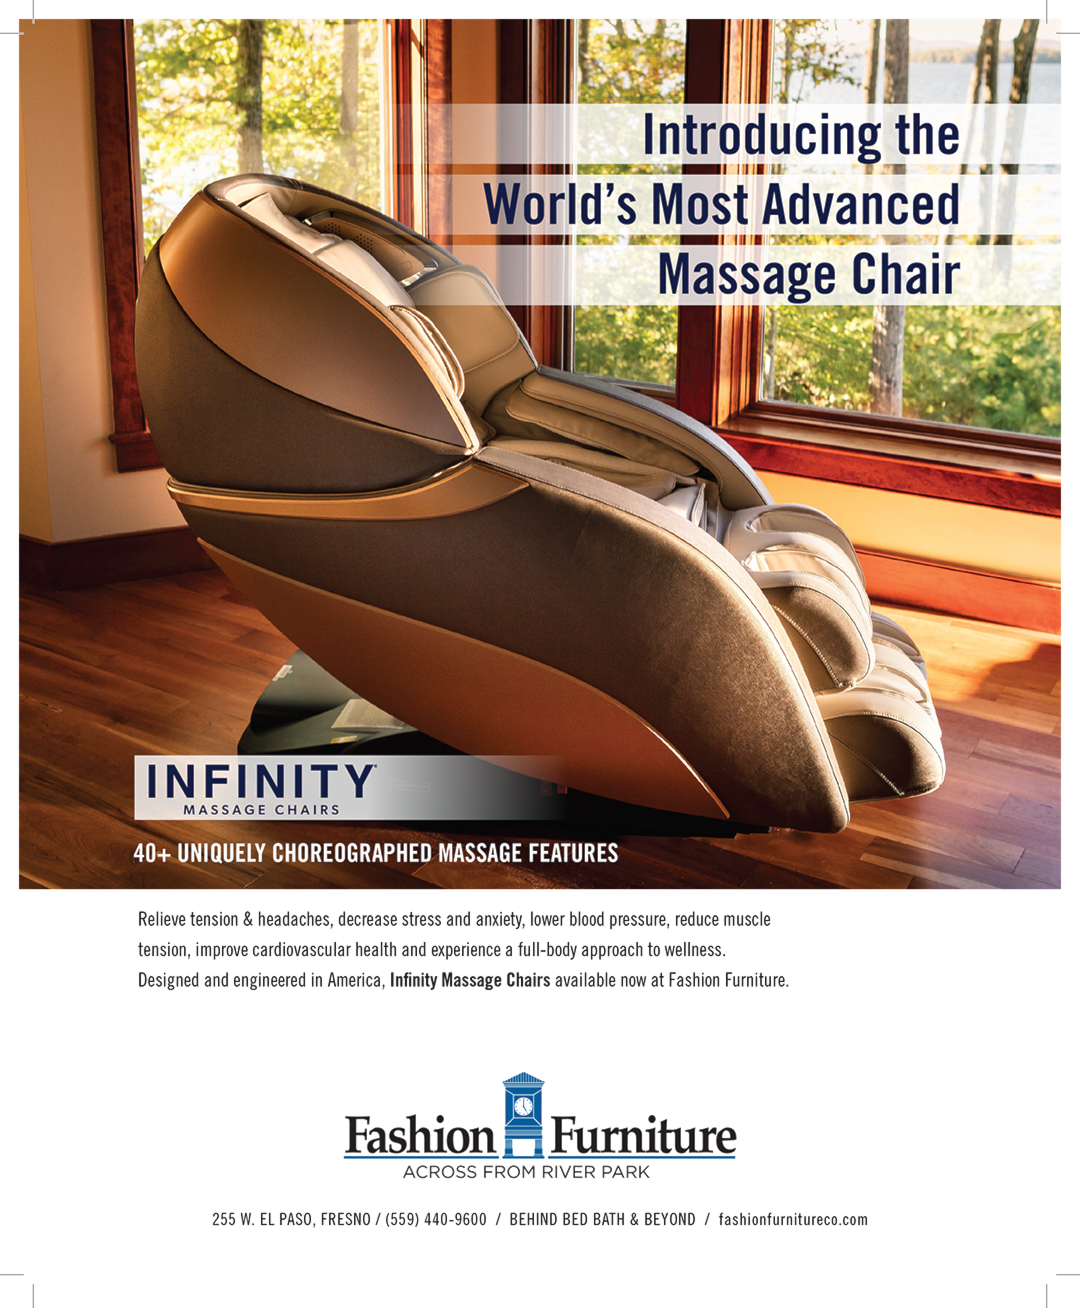 Infinity massage chair